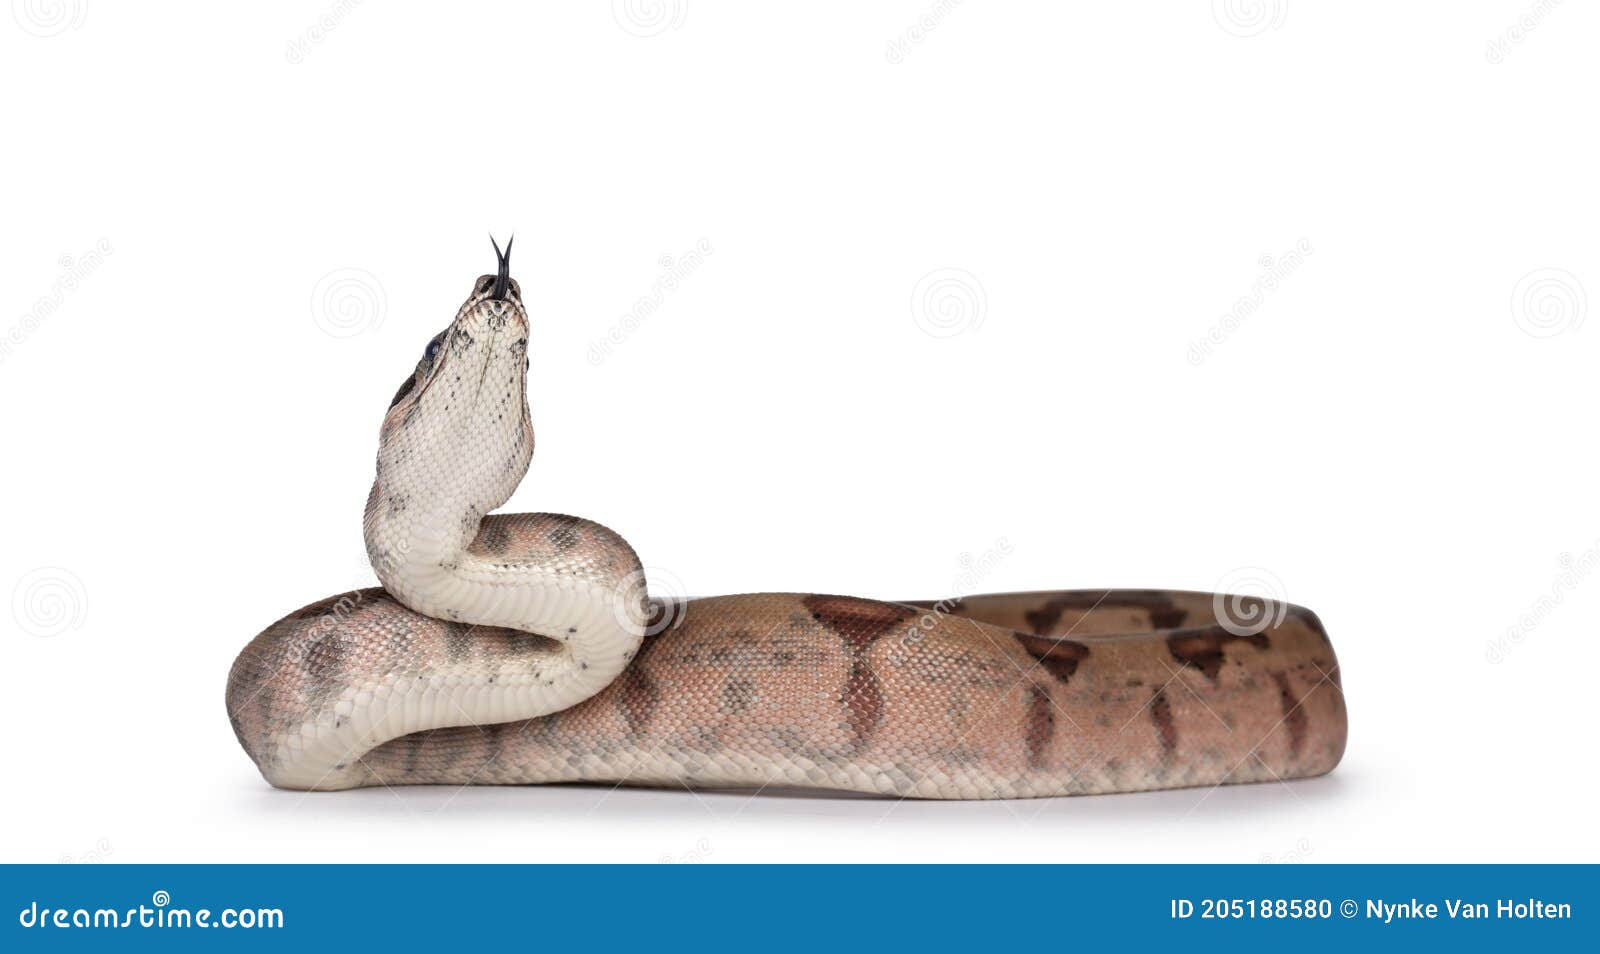 hypo boa constrictor snake on white